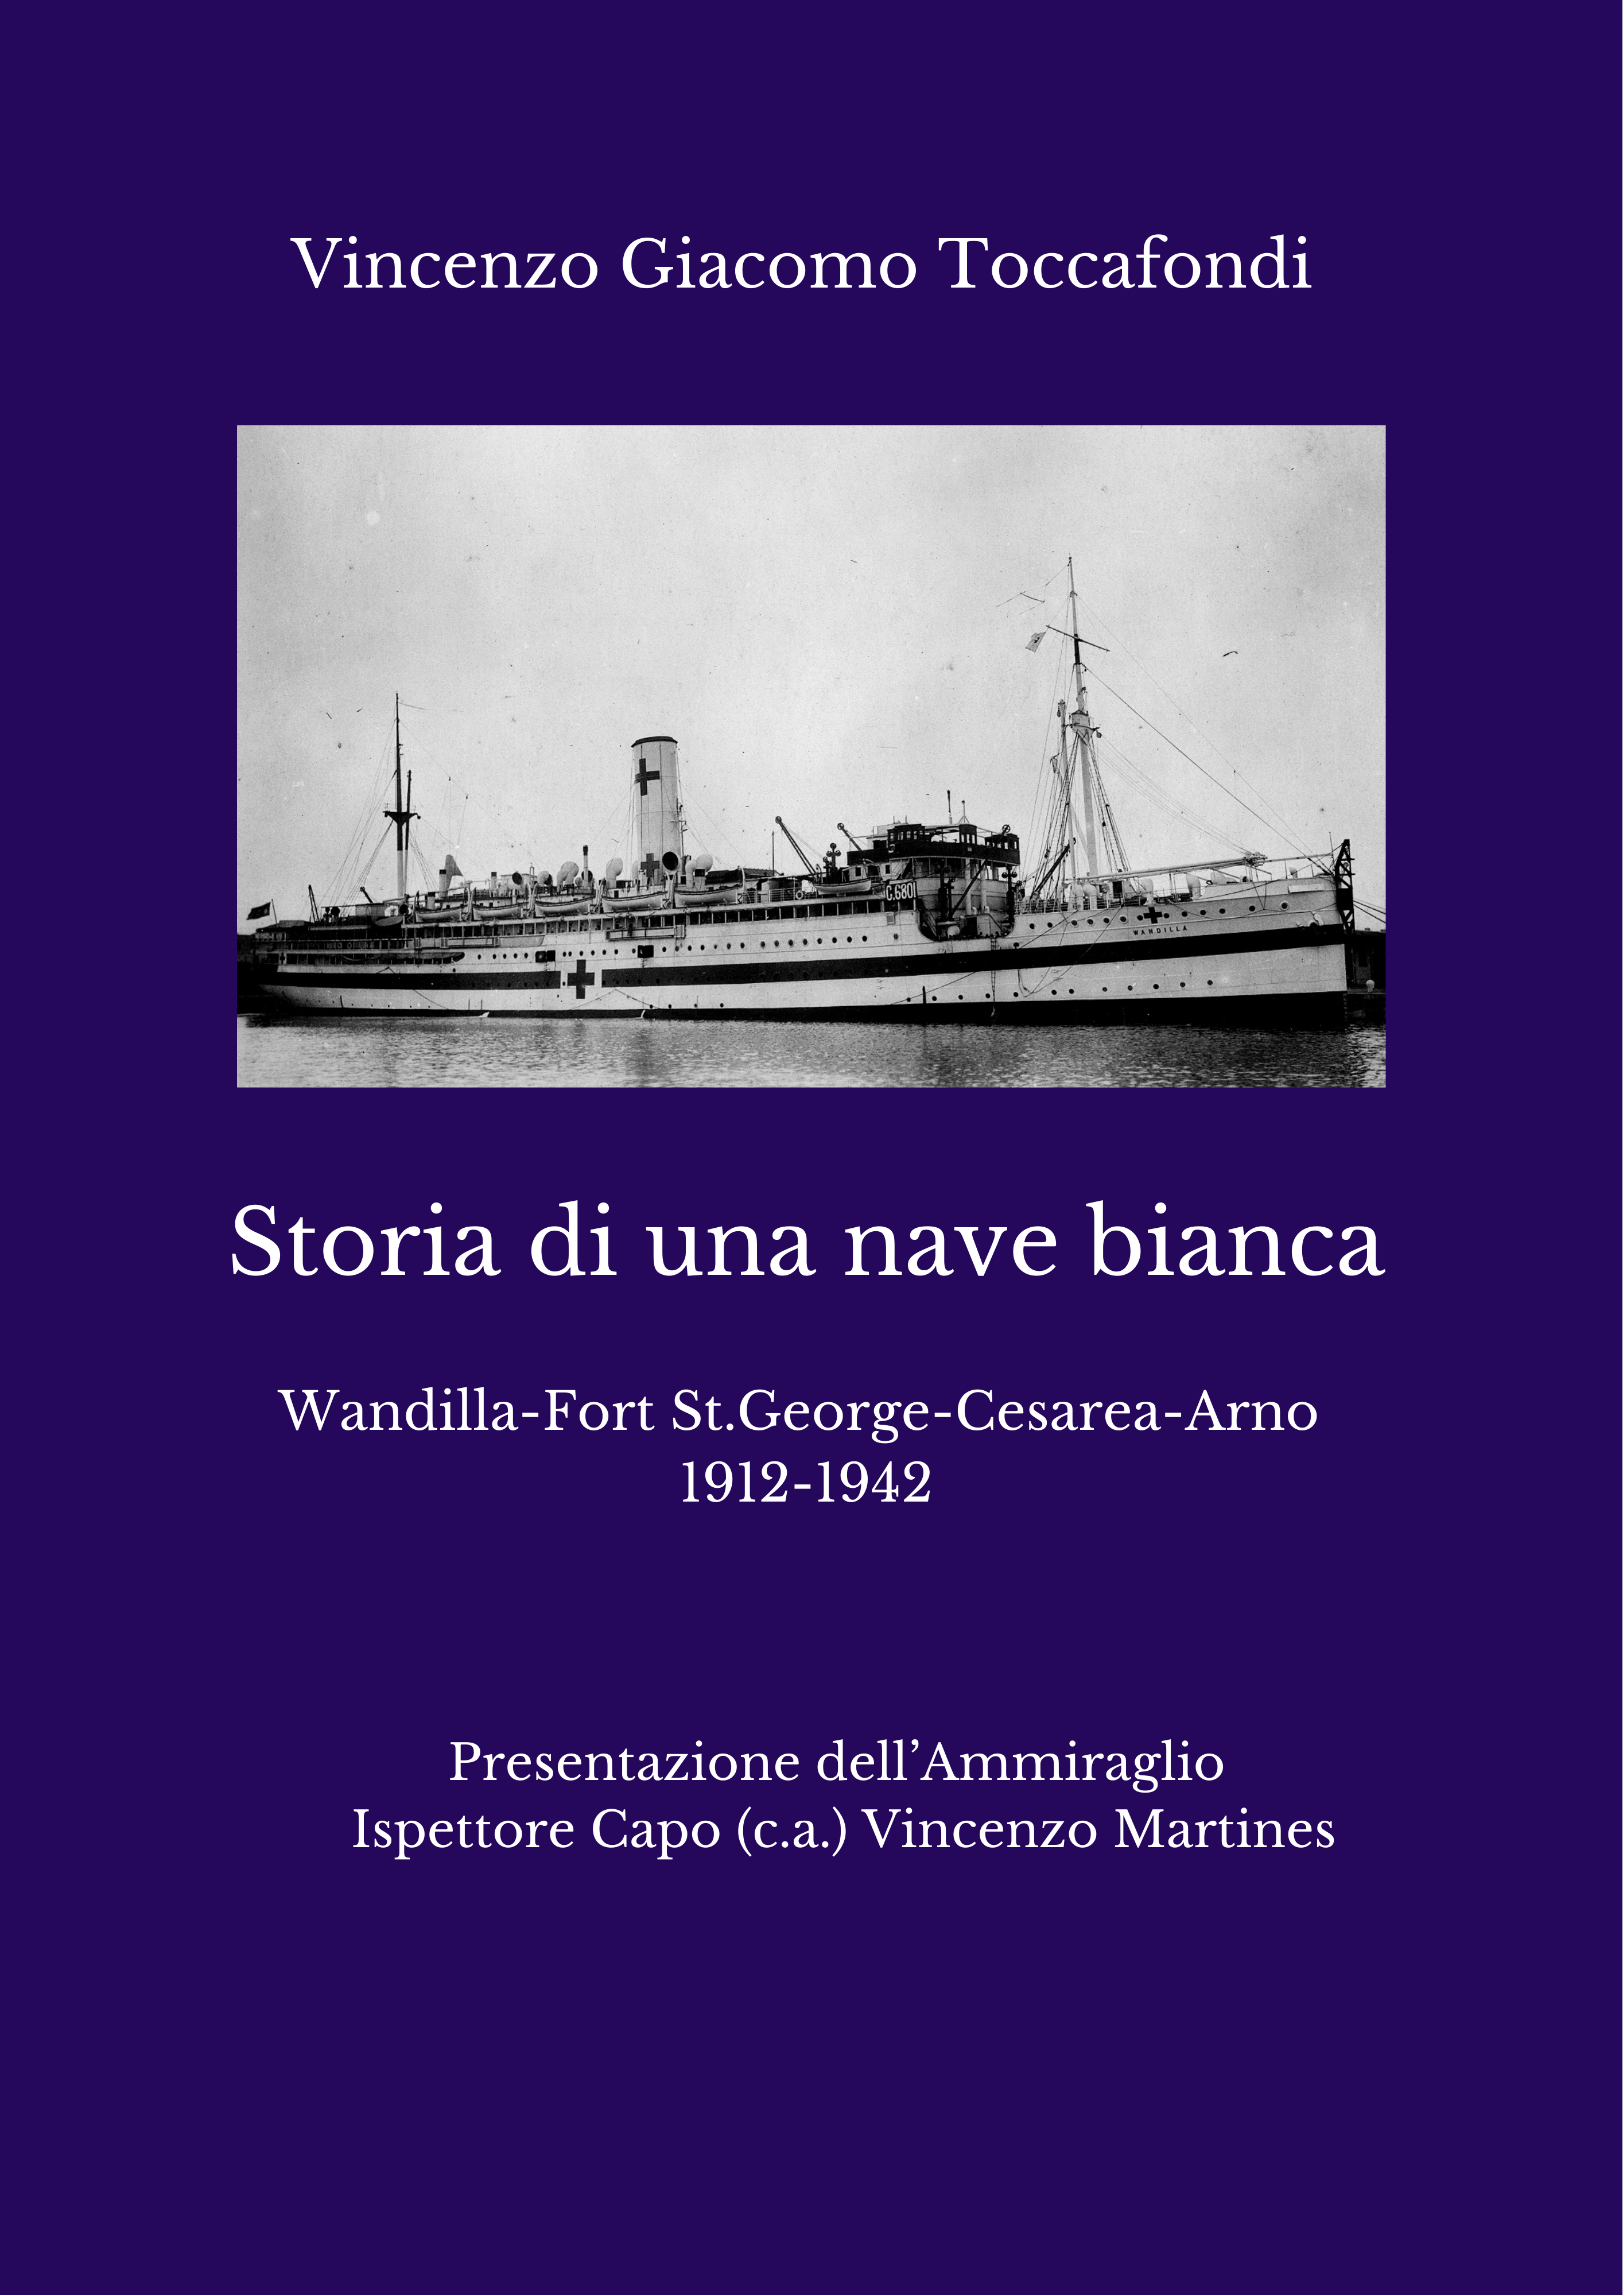 Cover of Vincenzo Giacomo Toccafondi's book 